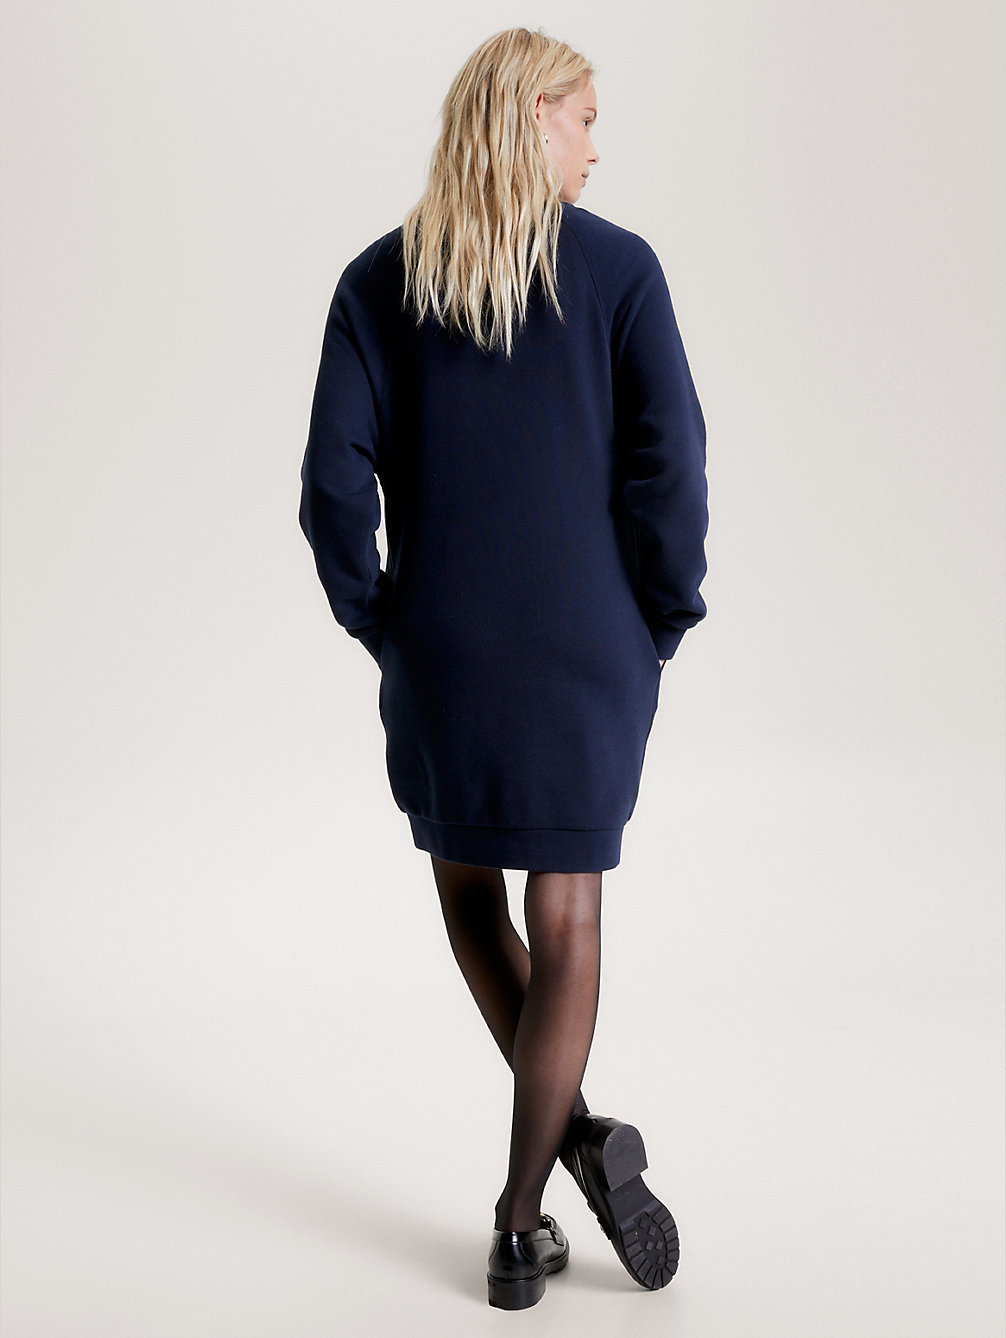 robe-sweat 1985 collection blue pour femmes tommy hilfiger